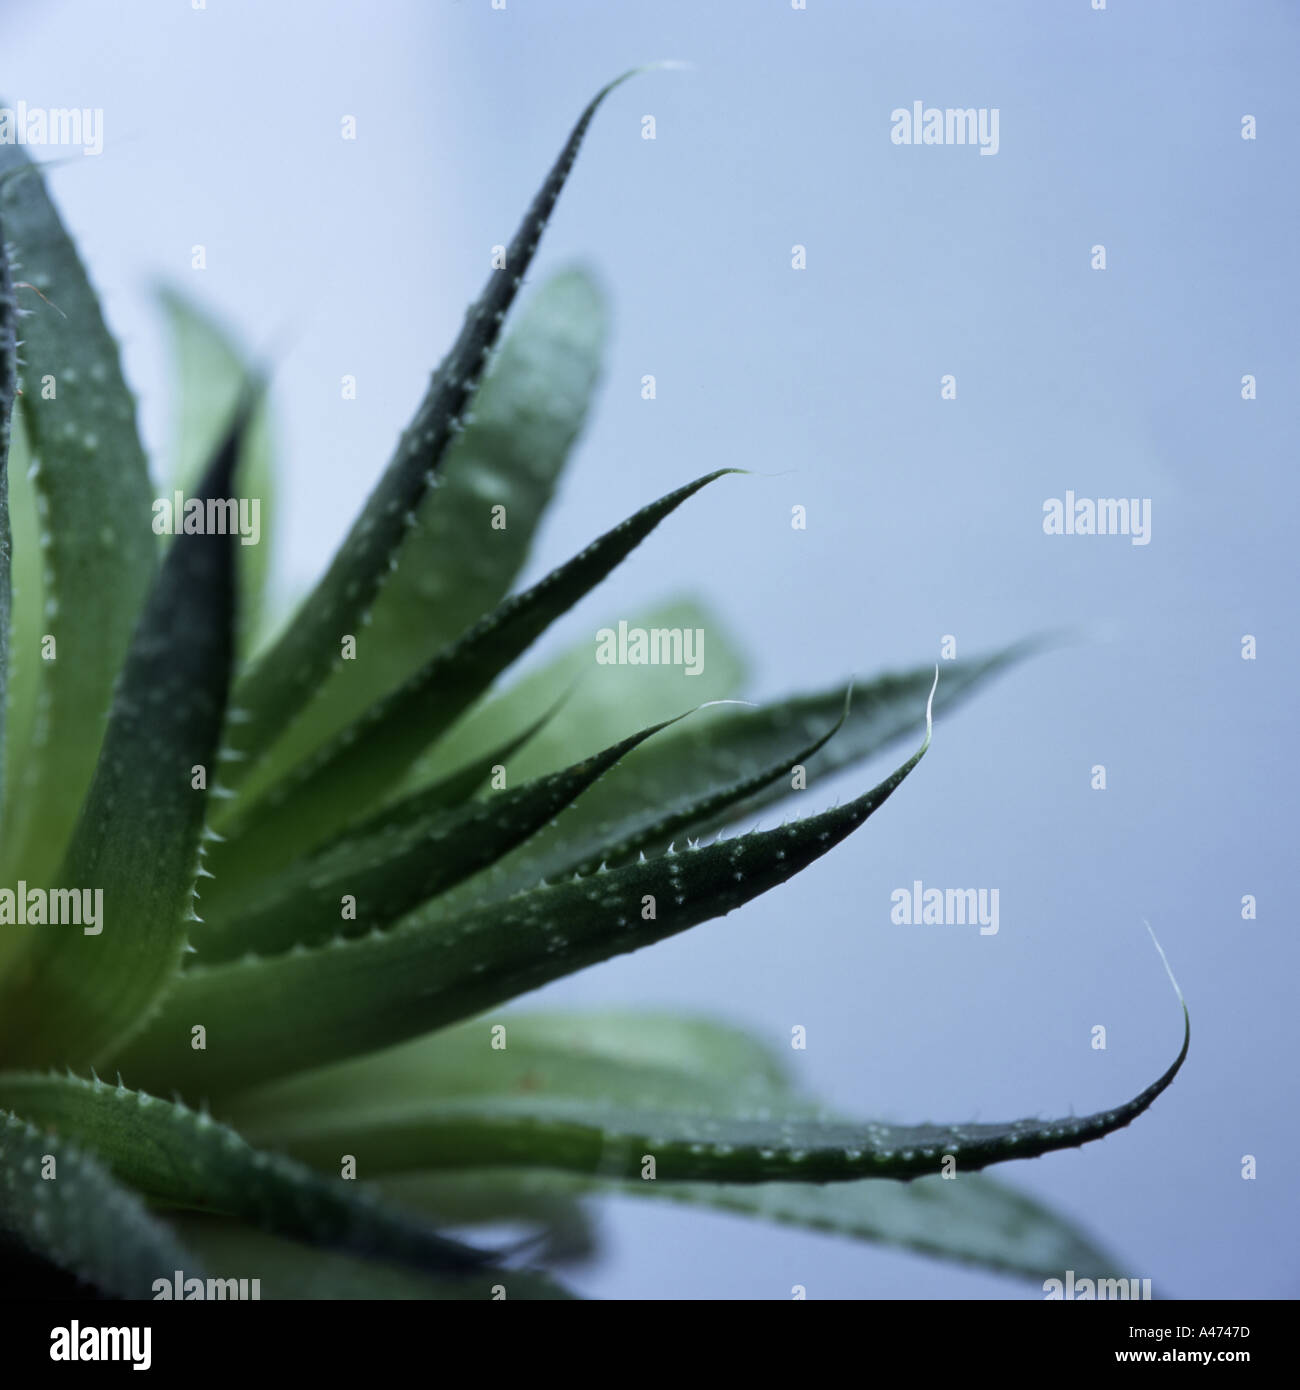 Nahaufnahme der Aloe Vera Pflanze gegen blass grau hinterlegt  Stockfotografie - Alamy